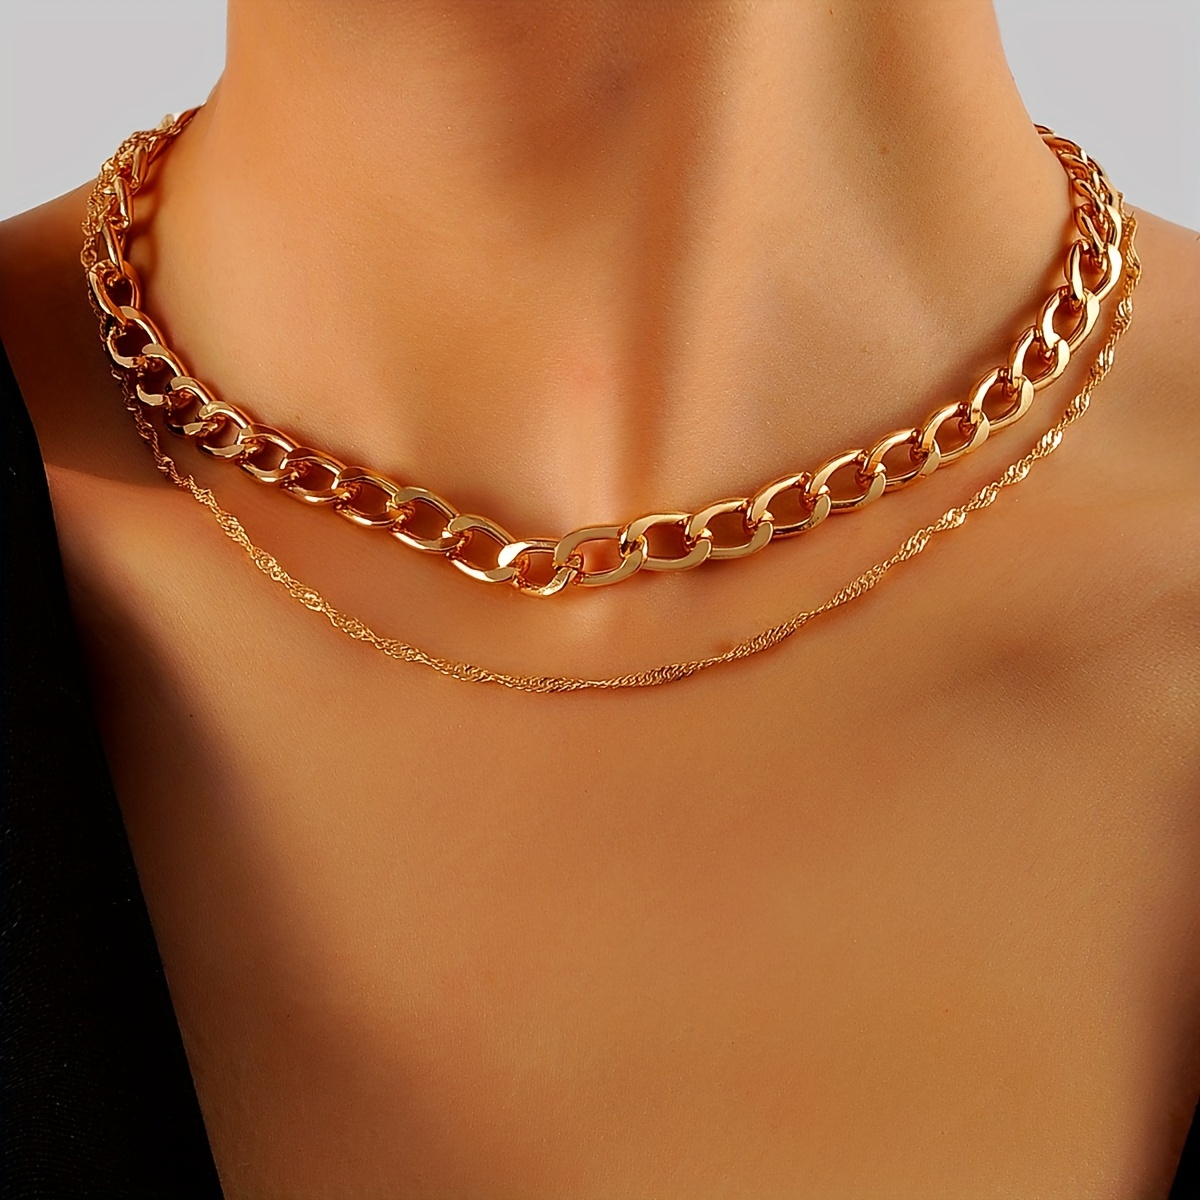 Necklace Golden Chain Pendant for Women & Girls (Gold)